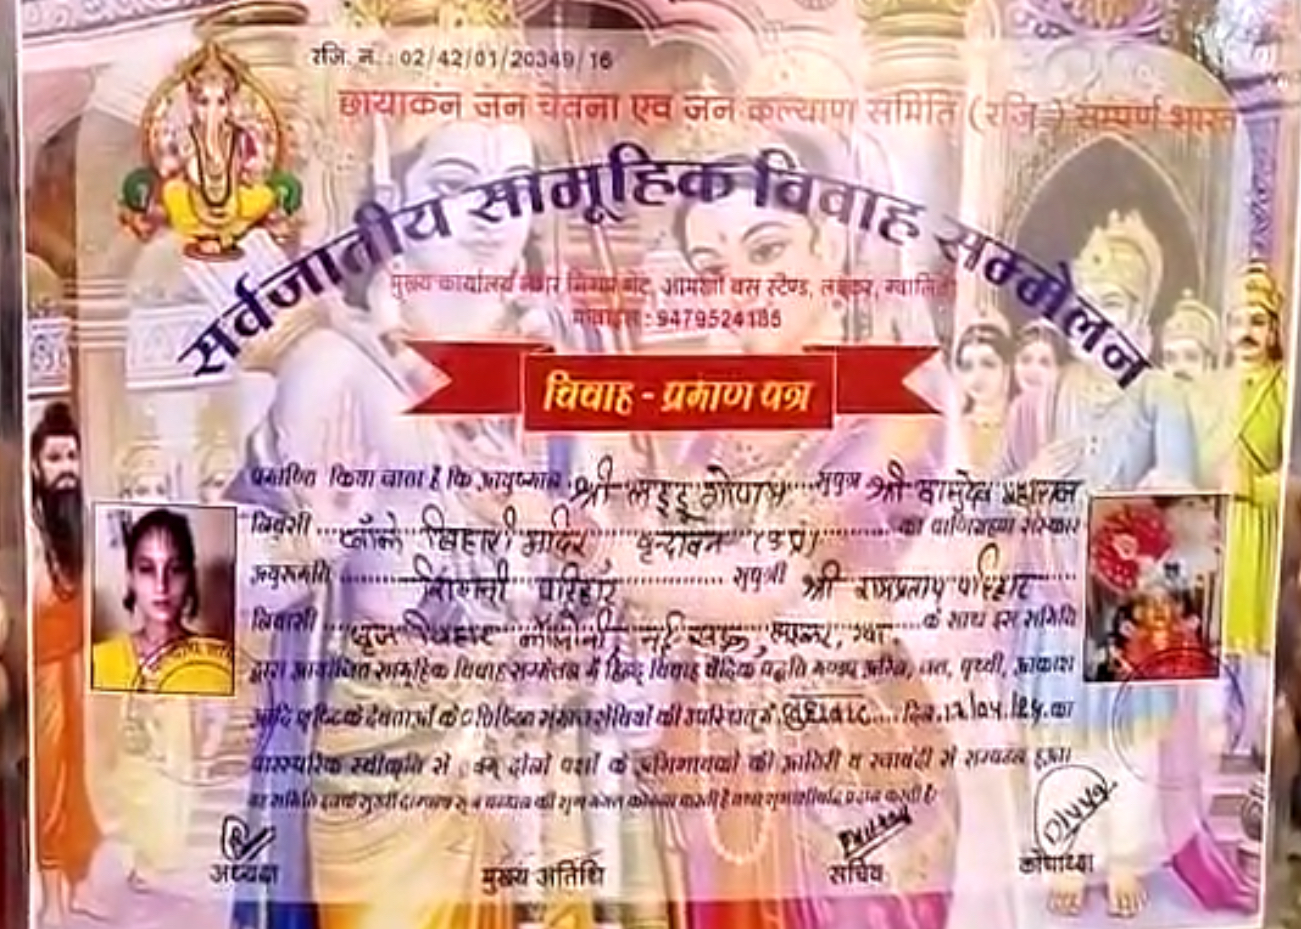 Devotee Married LordKrishna In Gwalior